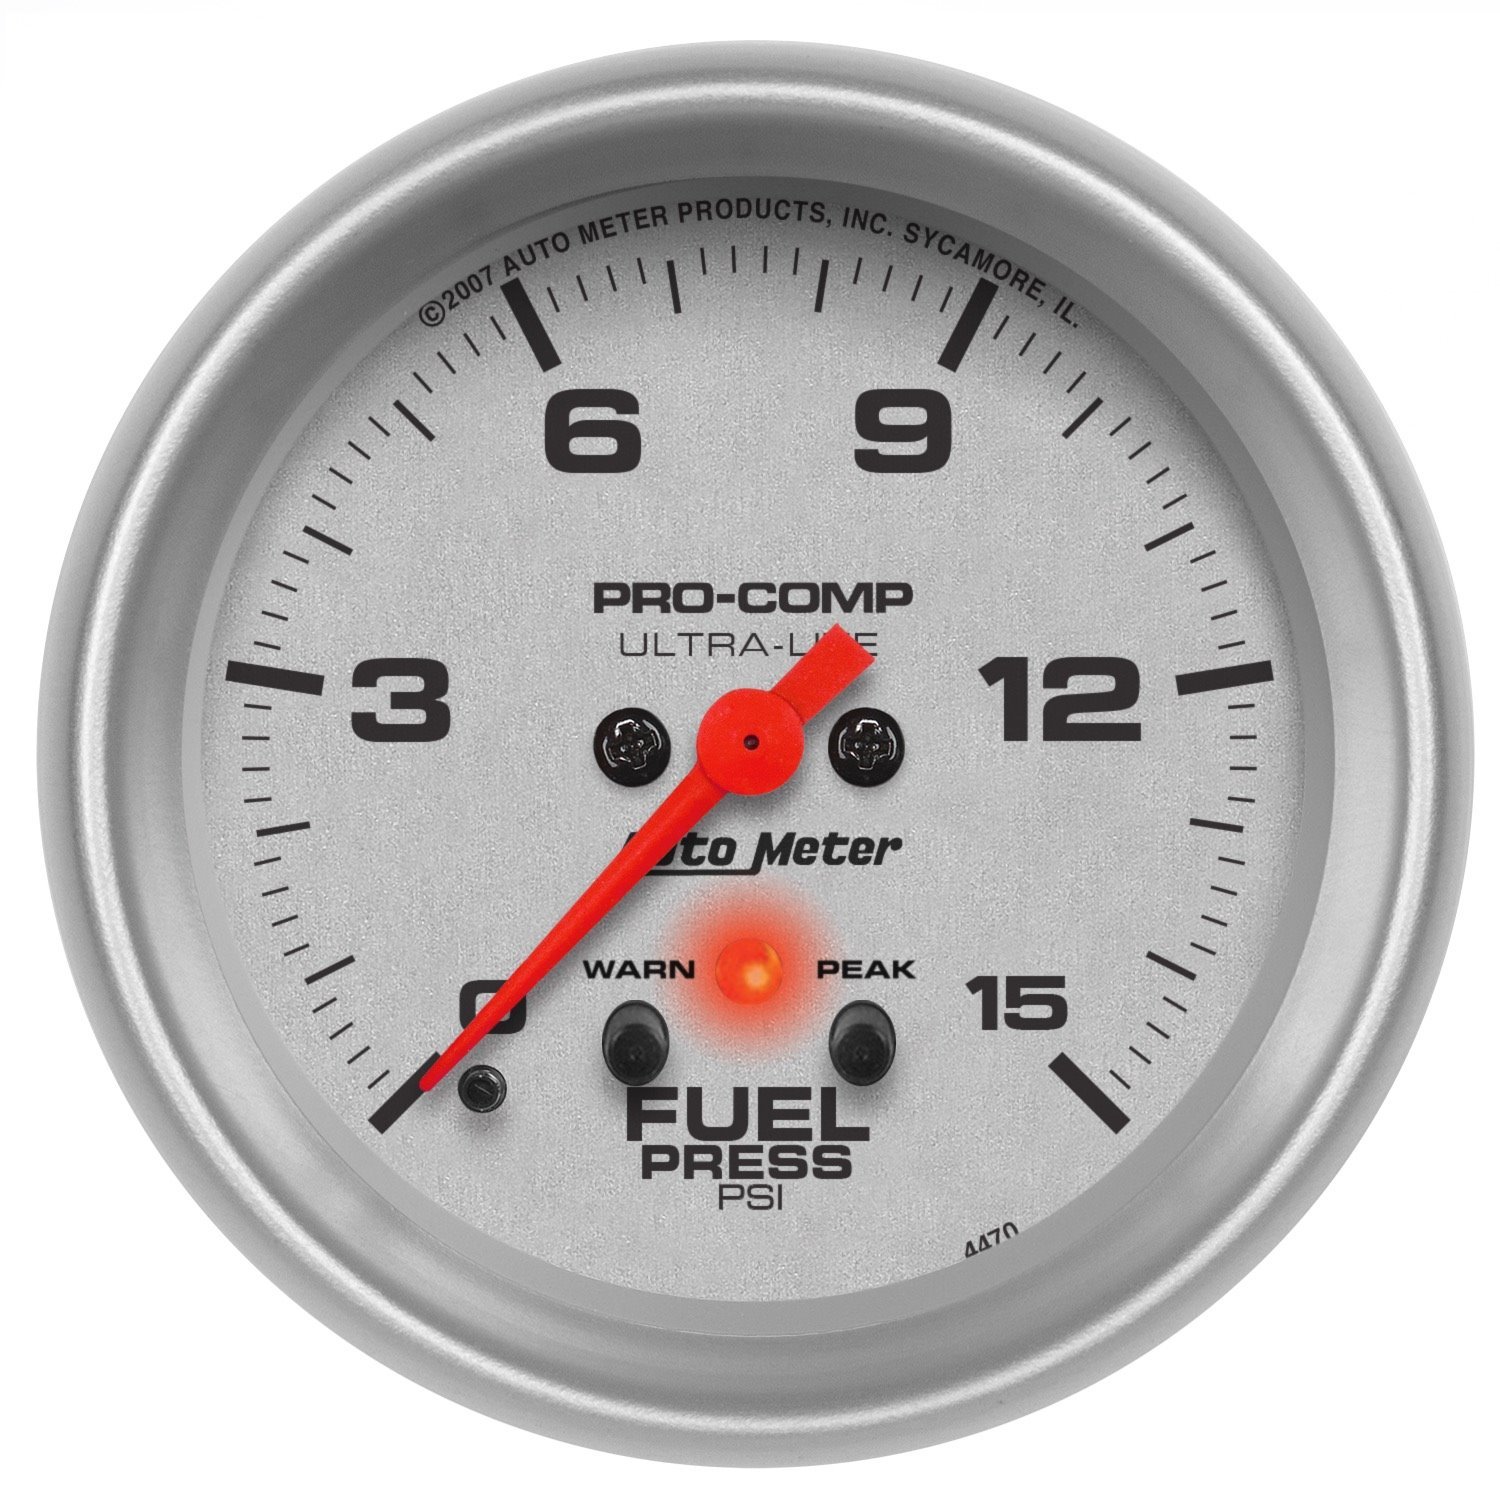 Ultra-Lite Fuel Pressure Gauge 2-5/8" electrical